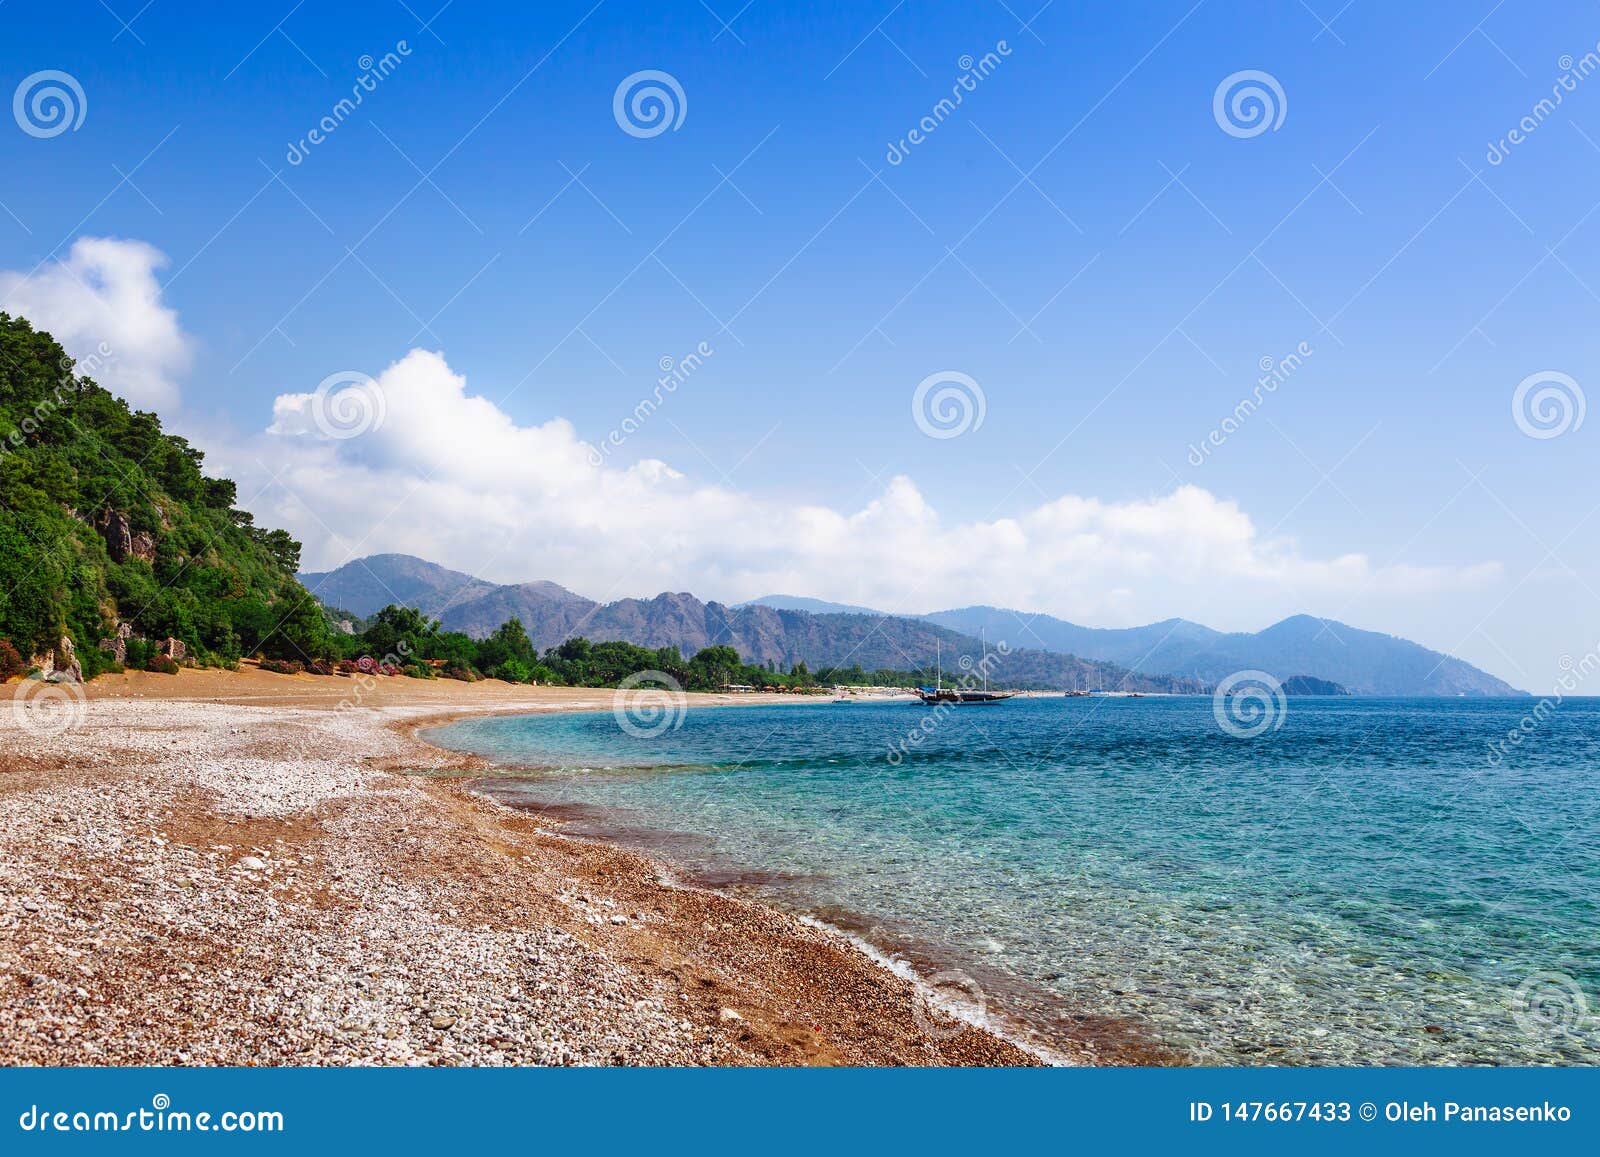 beach near of ancient greek and roman ancient city of olympos coast kemer antalya turkey